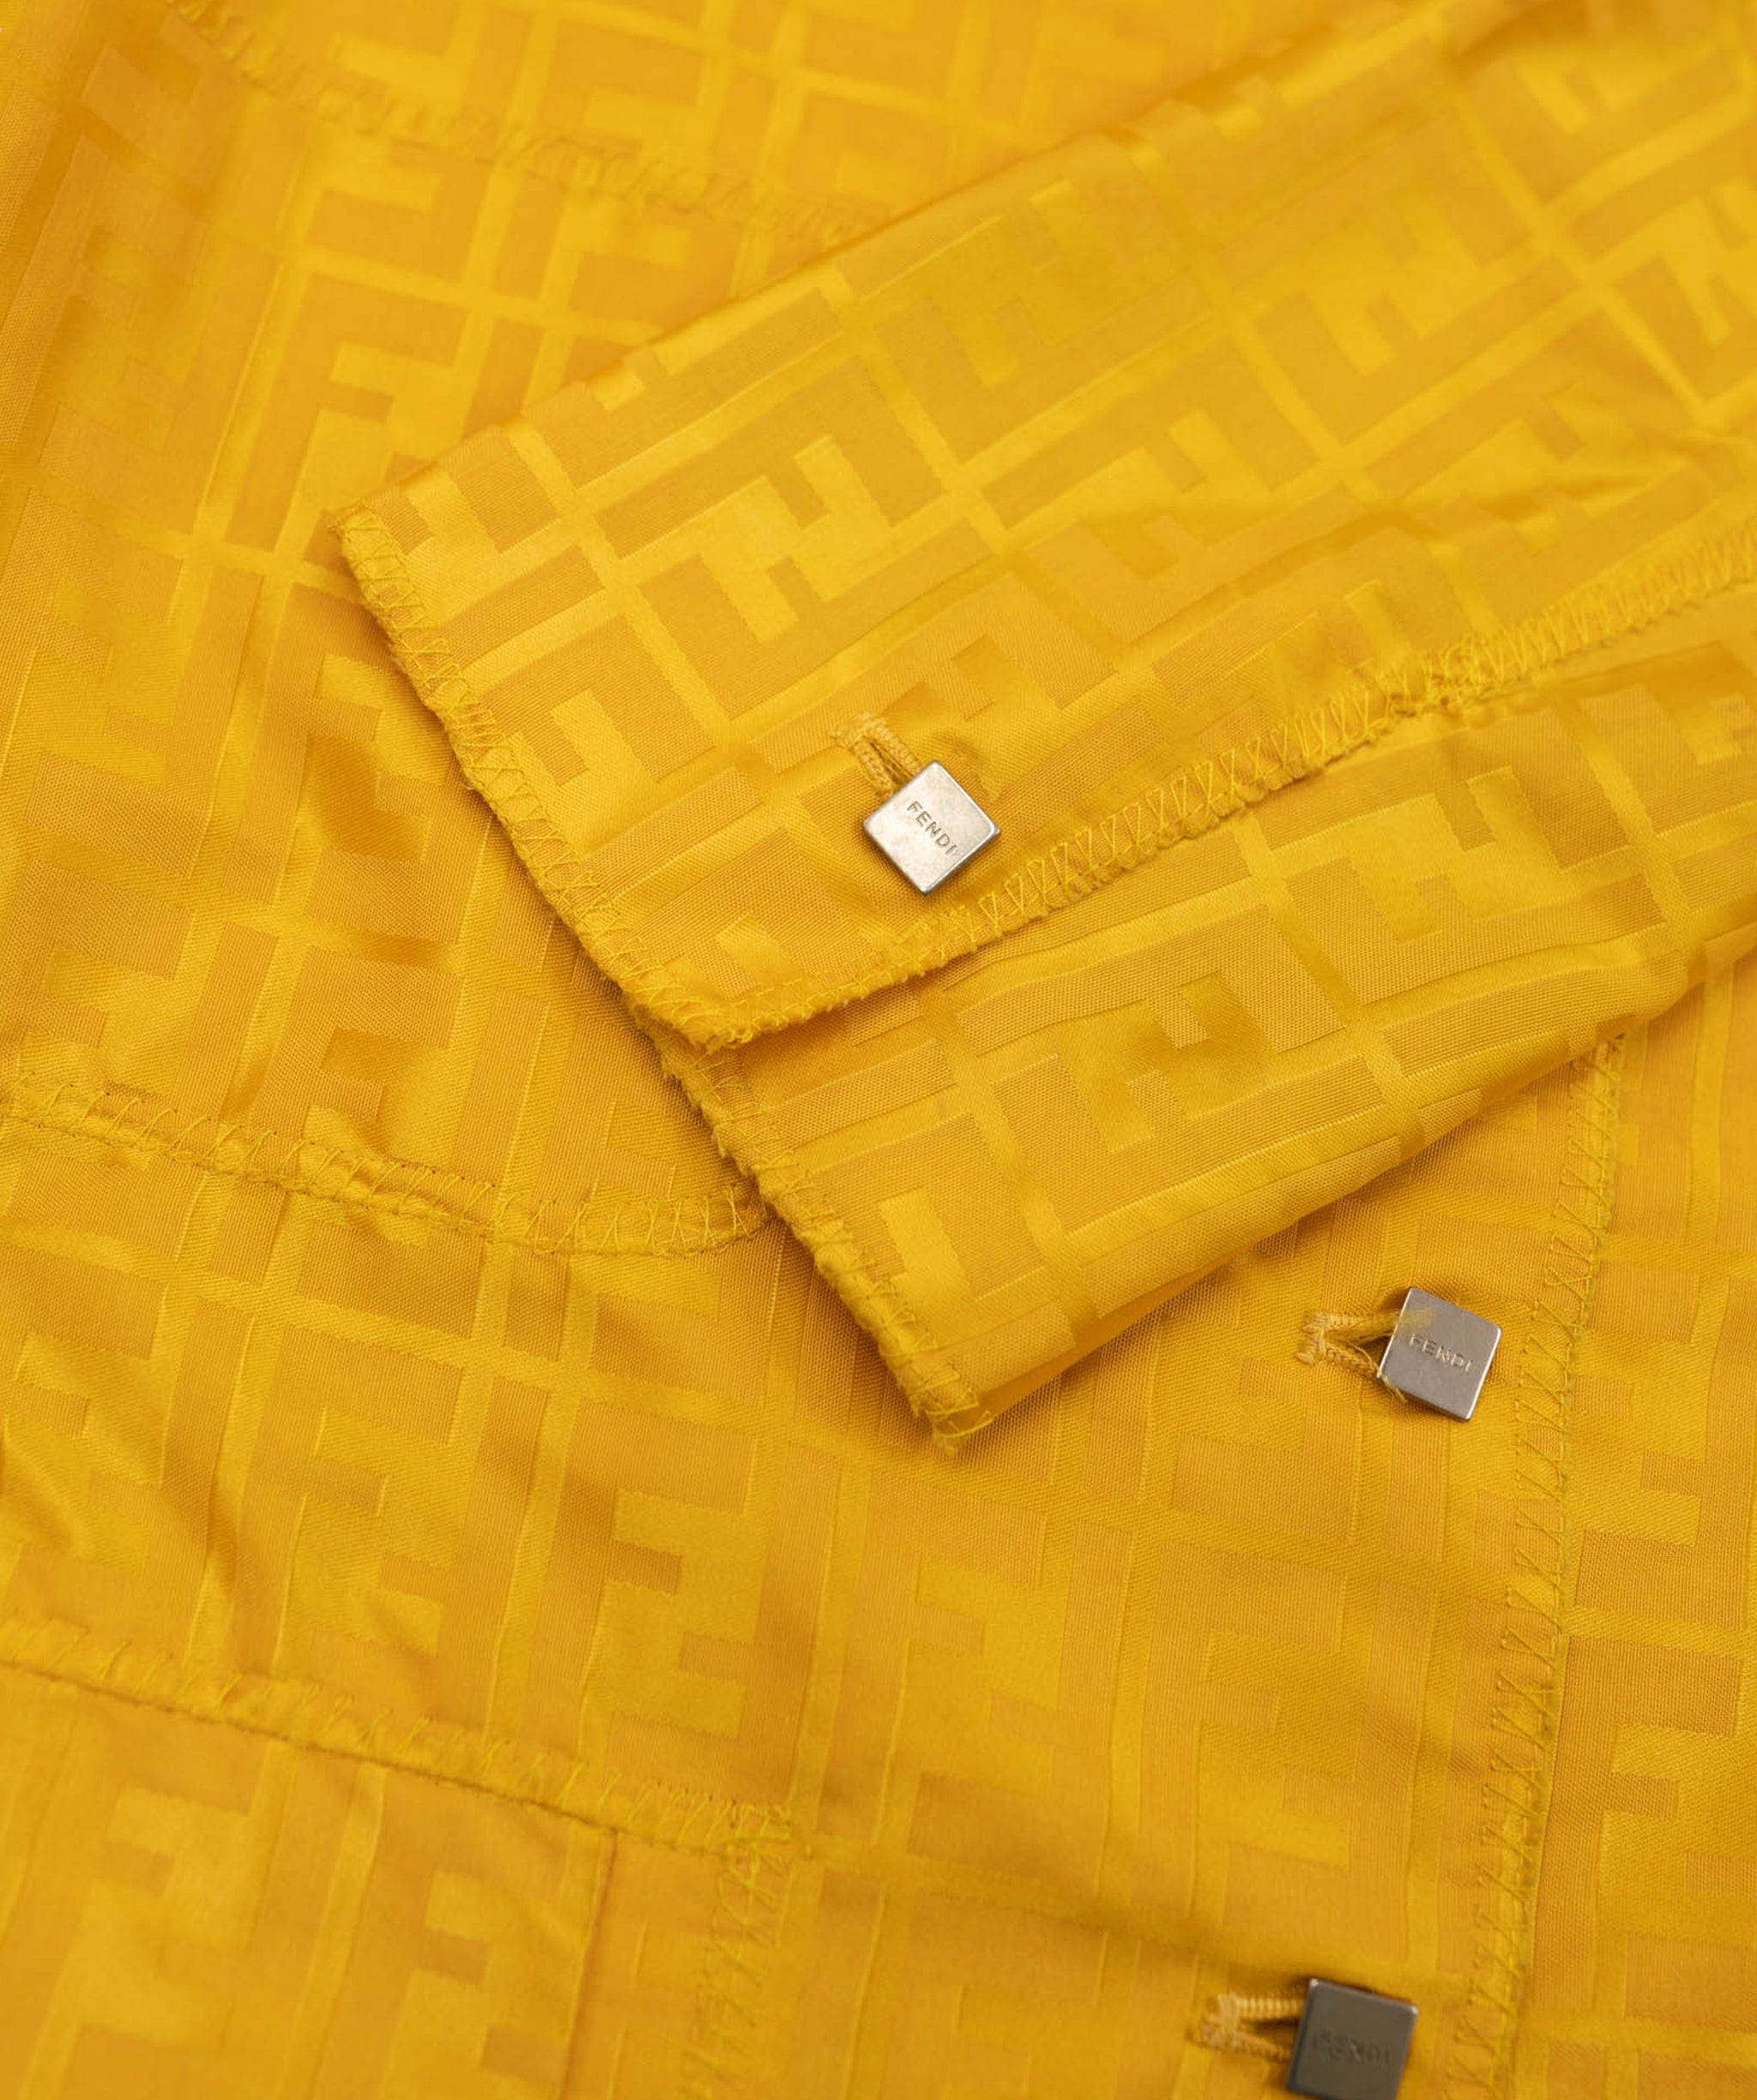 Fendi Fendi Zucca Trench Coat Yellow ASL4675